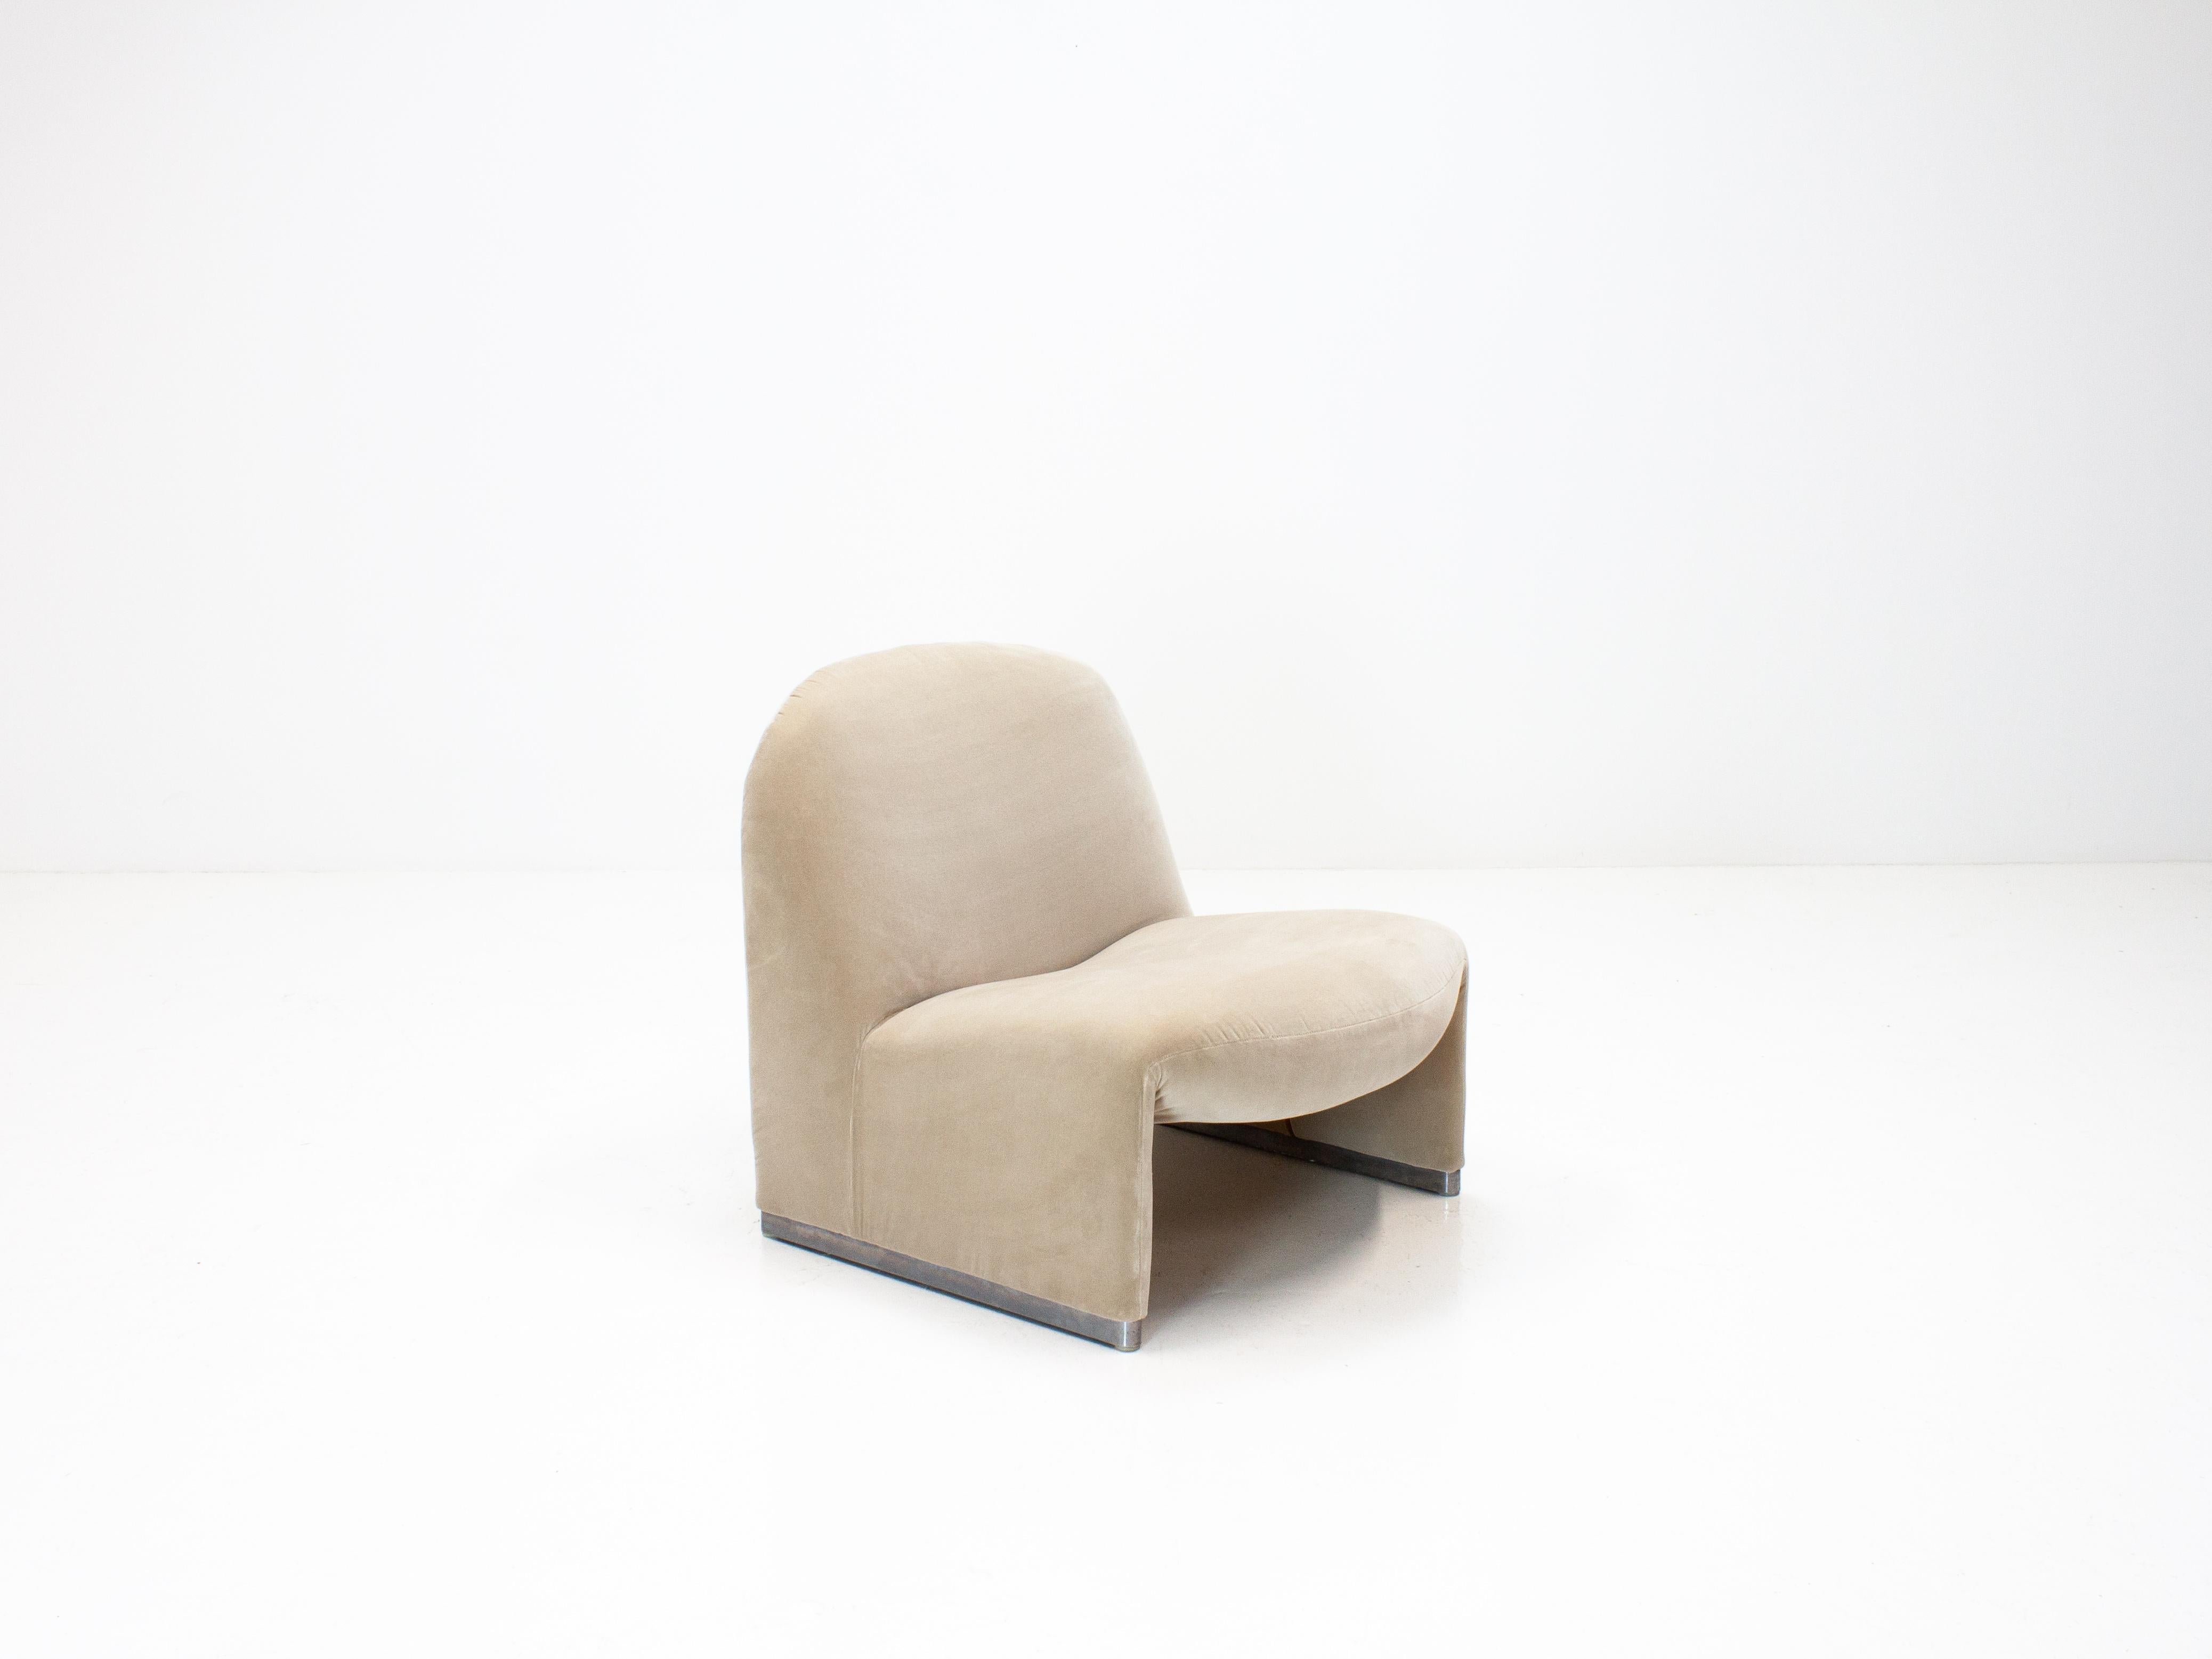 20th Century Giancarlo Piretti “Alky” Chair in New Velvet, Artifort, 1970s